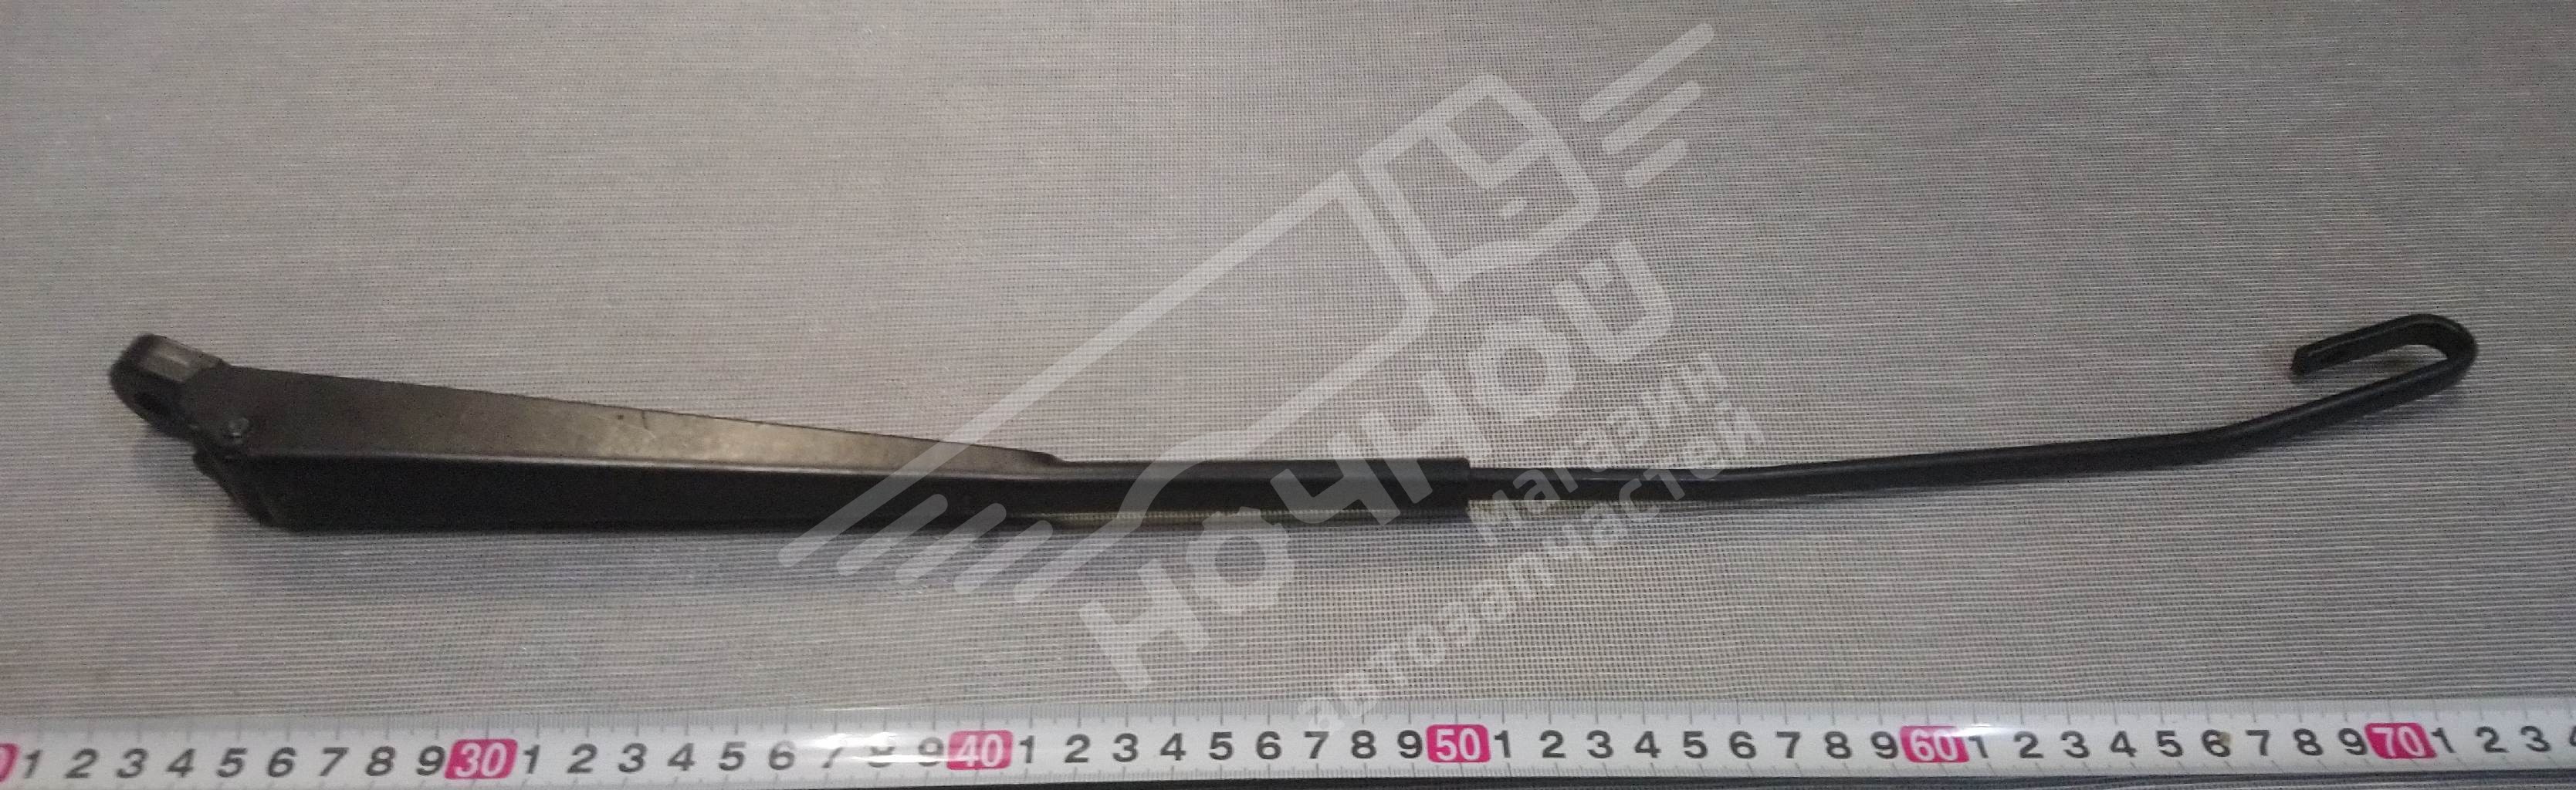 Рычаг МАЗ стеклоочистителя 64221 (L-545 мм) (HRT, Китай)